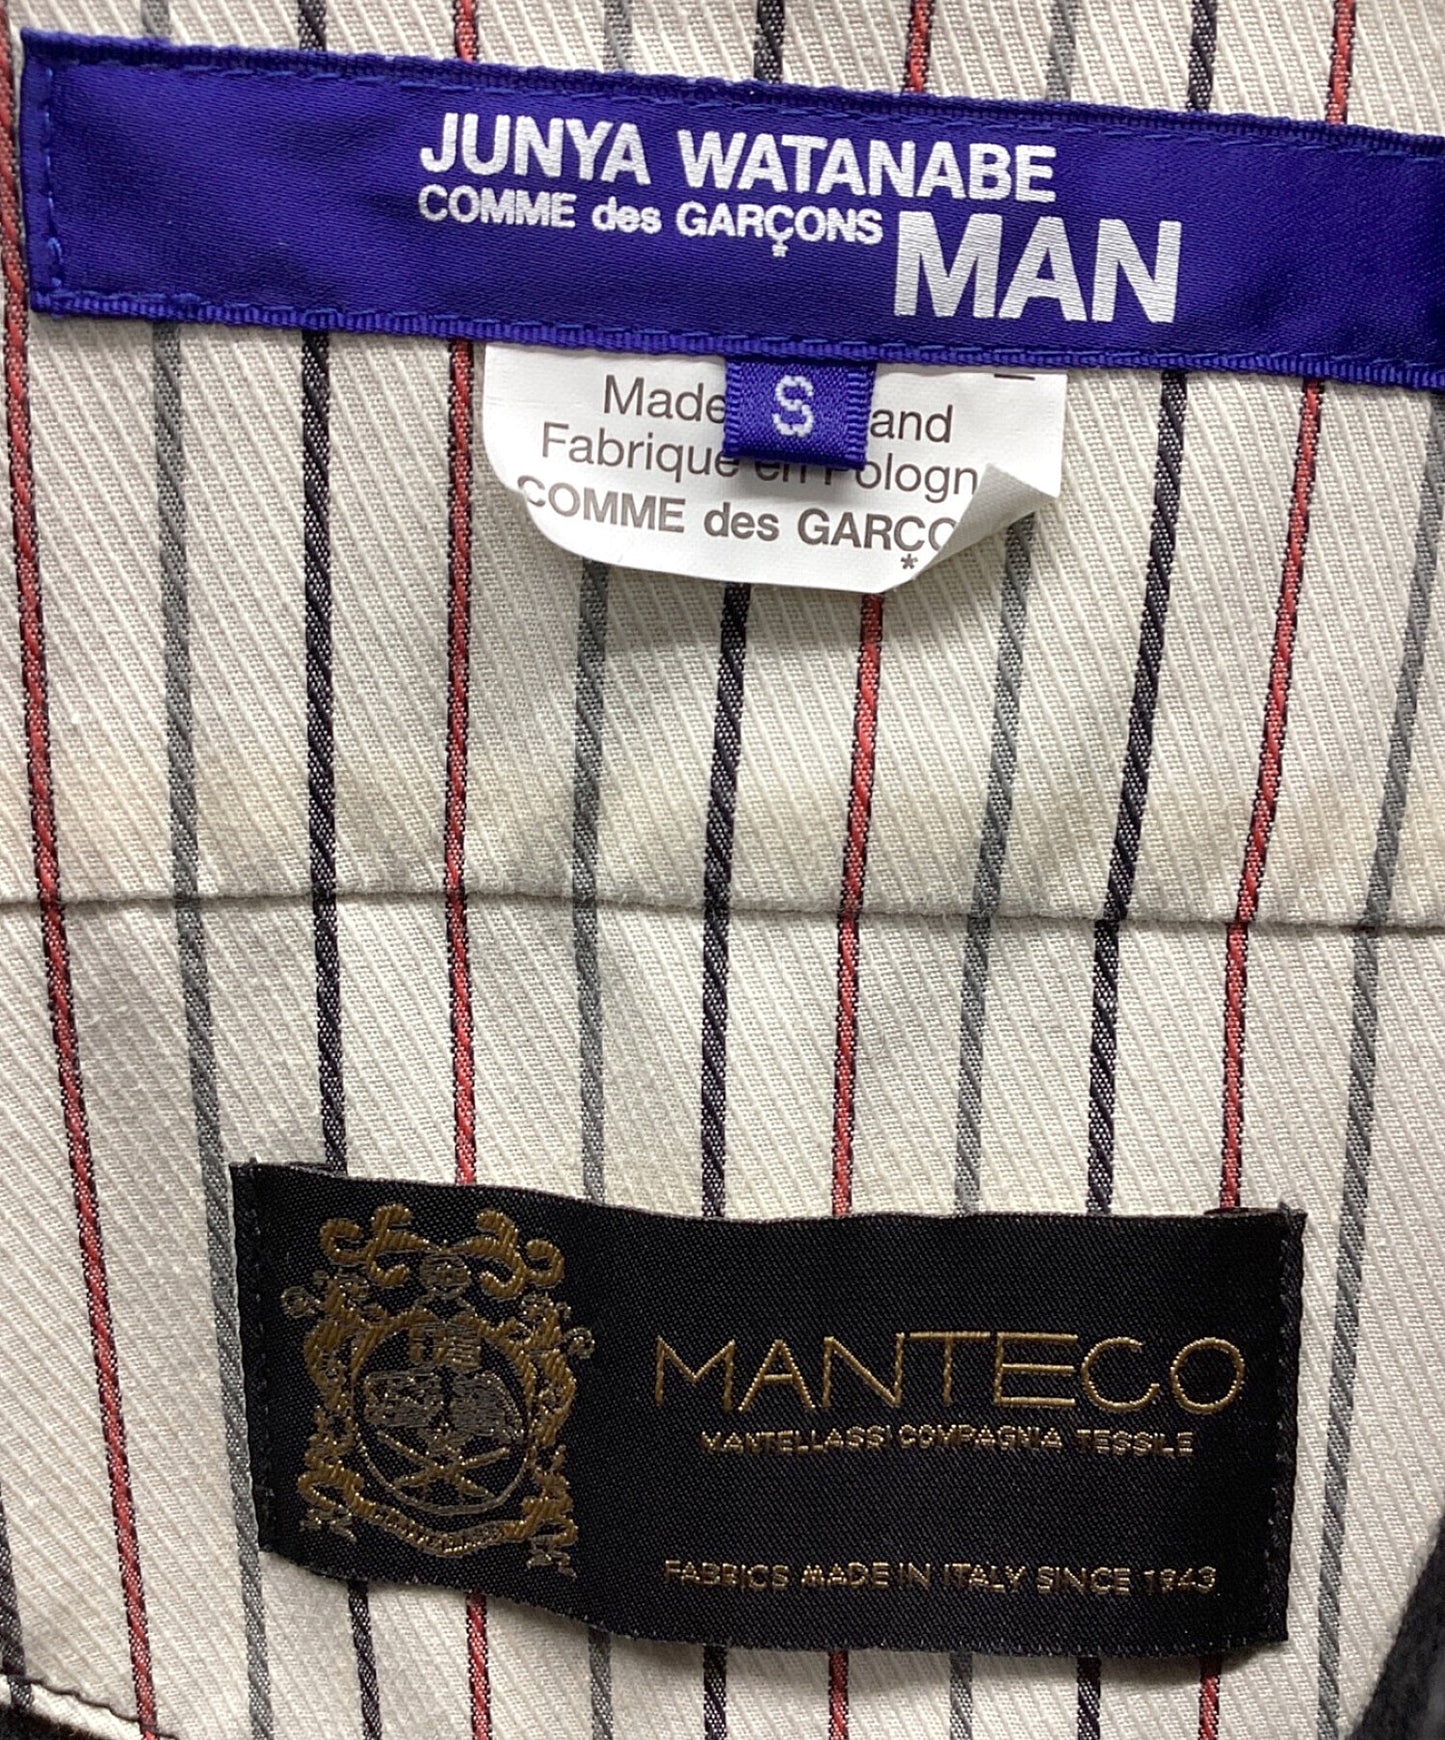 [Pre-owned] COMME des GARCONS JUNYA WATANABE MAN manteco shirt